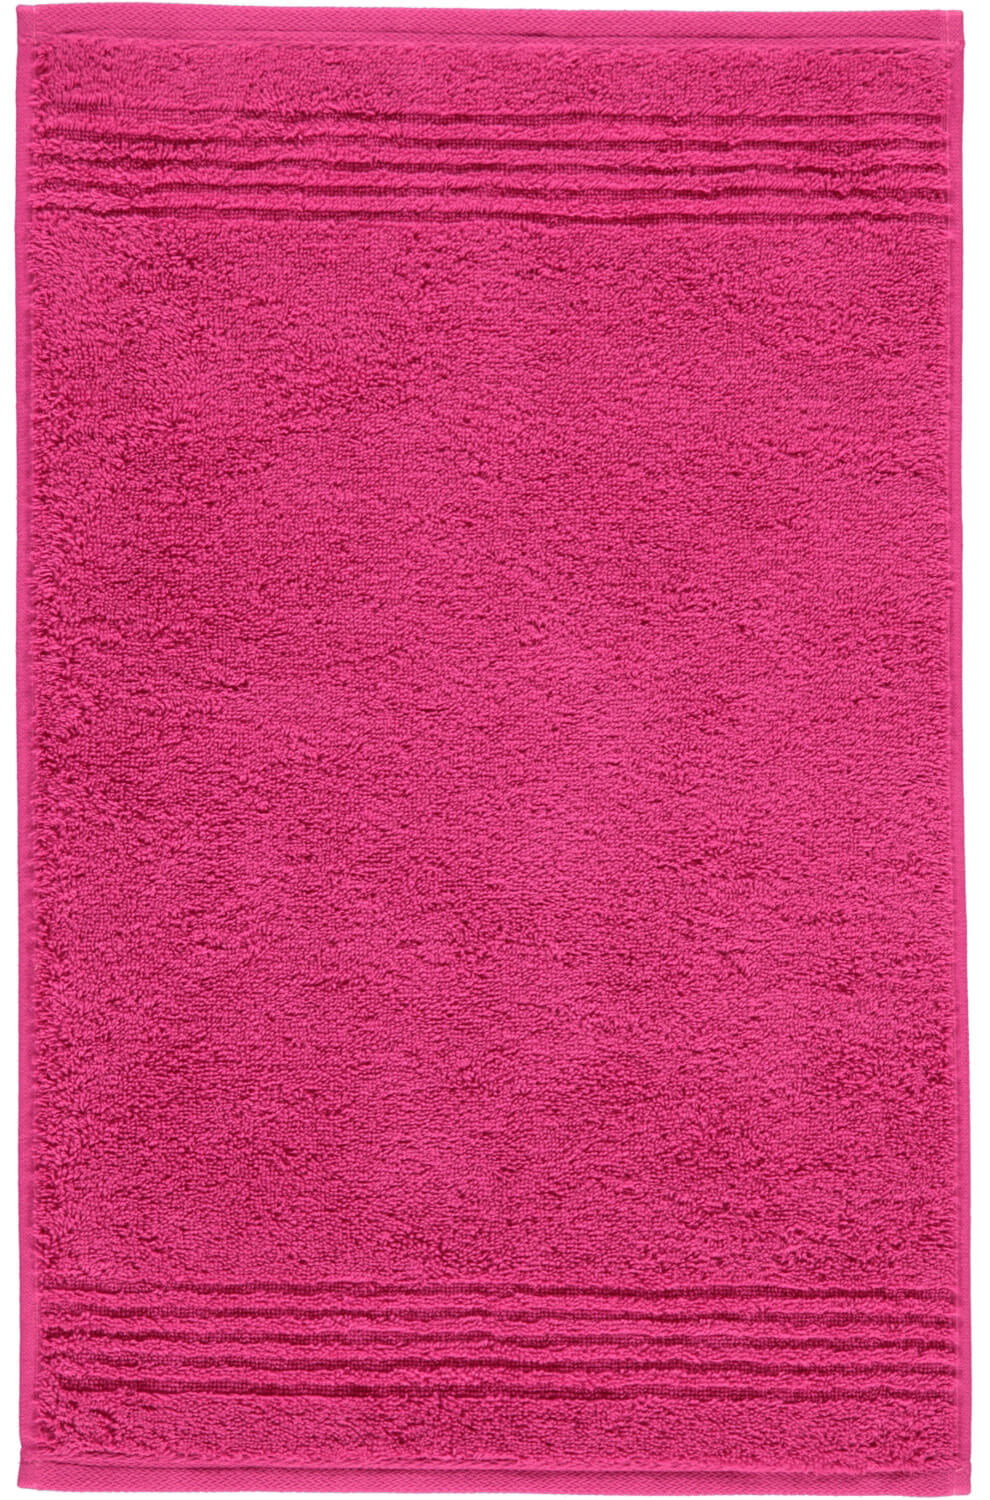 Розовое полотенце Essential Pink